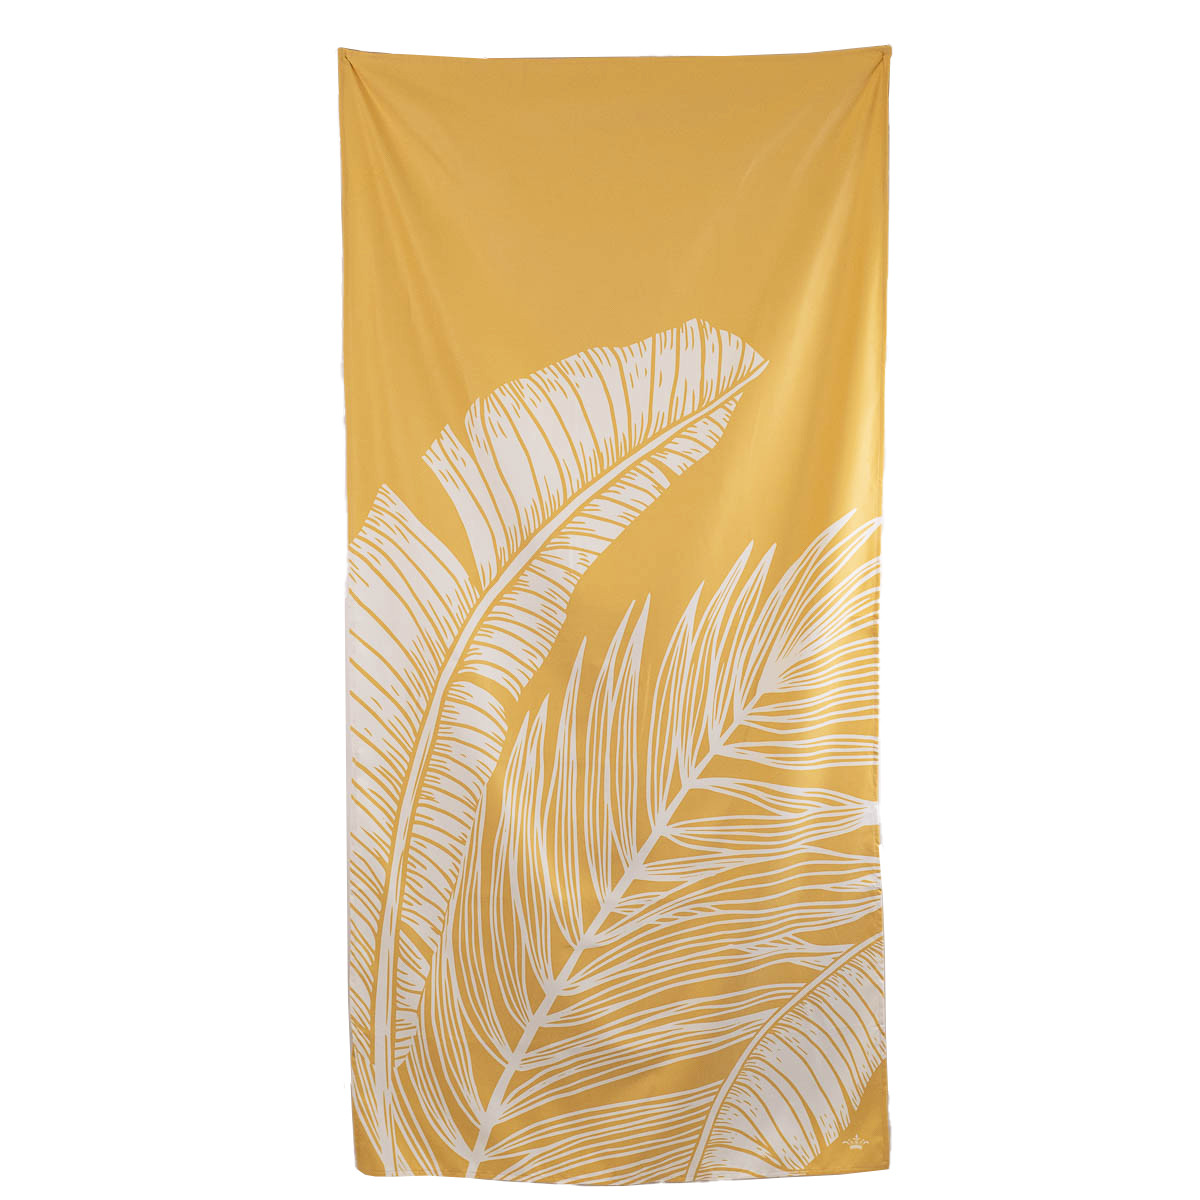 The Royal Standard Beach Towel